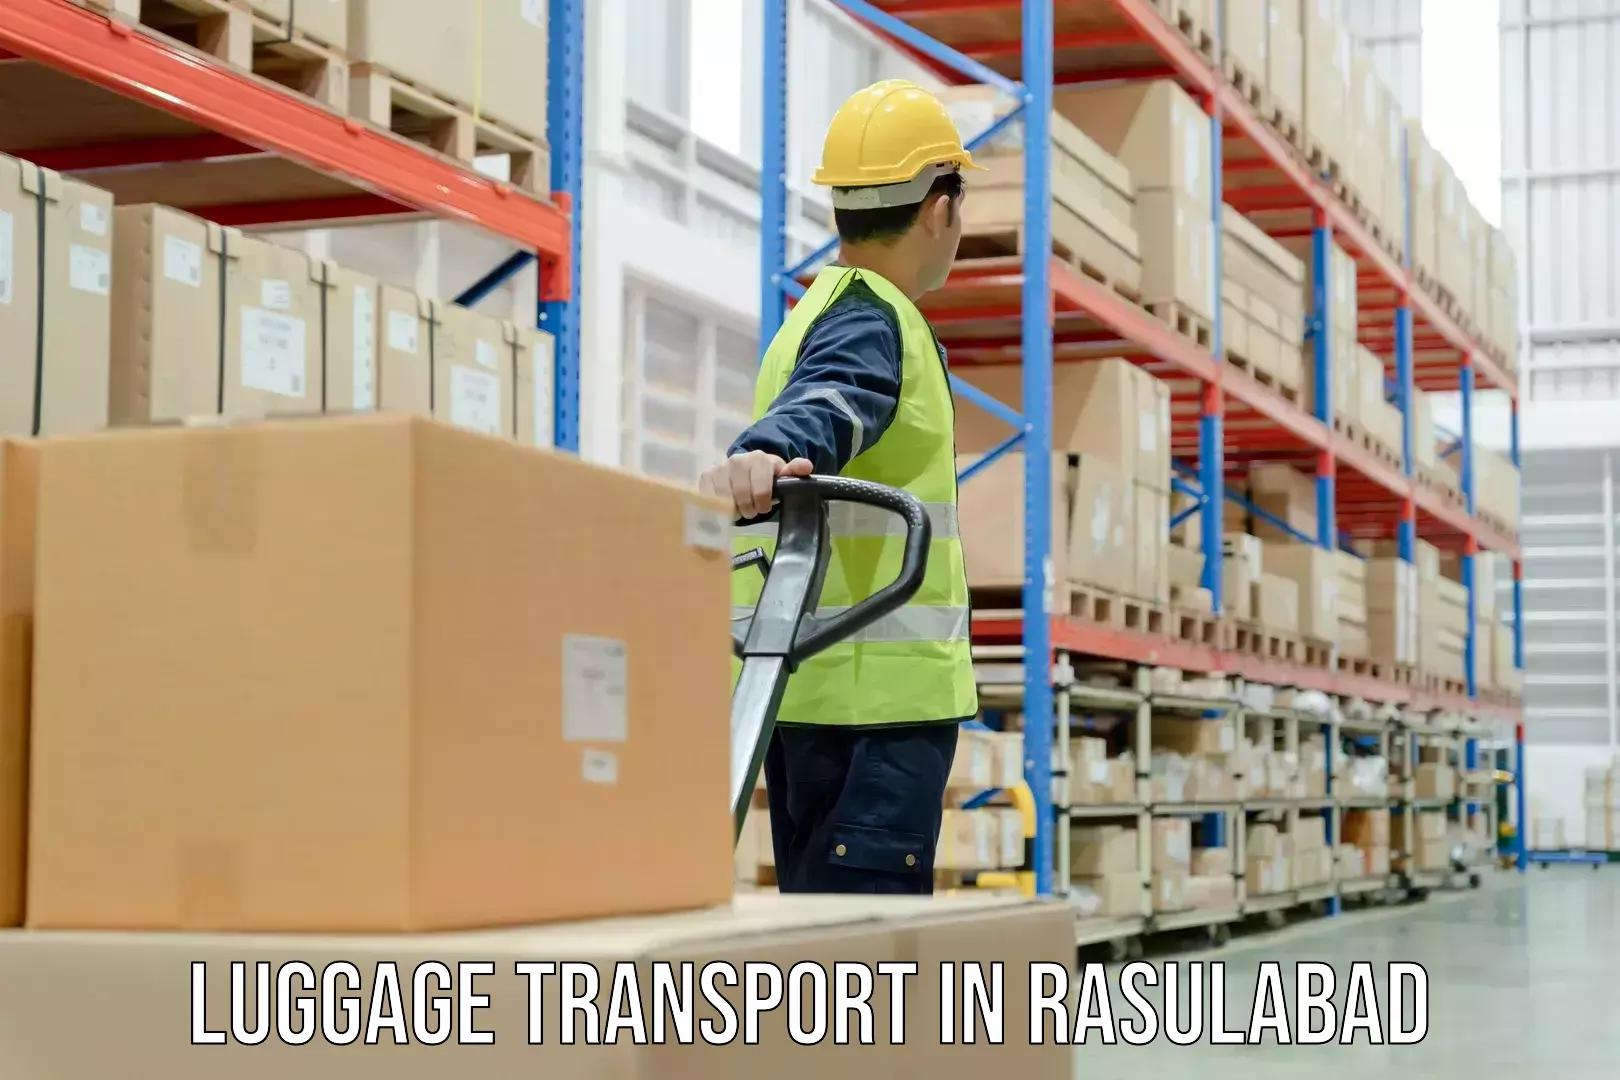 Luggage transfer service in Rasulabad